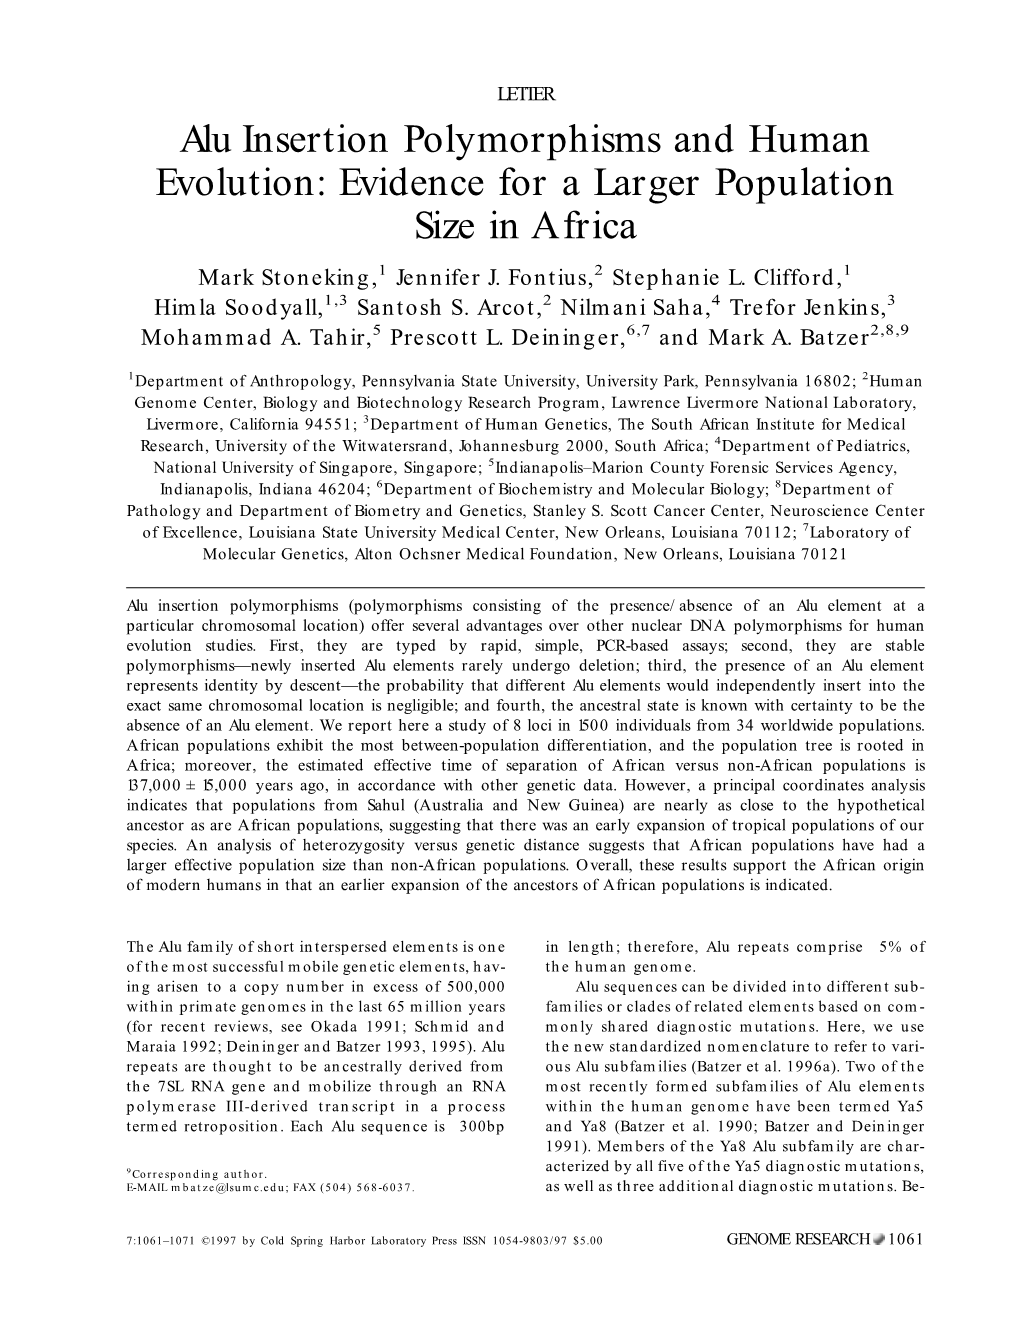 Alu Insertion Polymorphisms and Human Evolution: Evidence for a Larger Population Size in Africa Mark Stoneking,1 Jennifer J